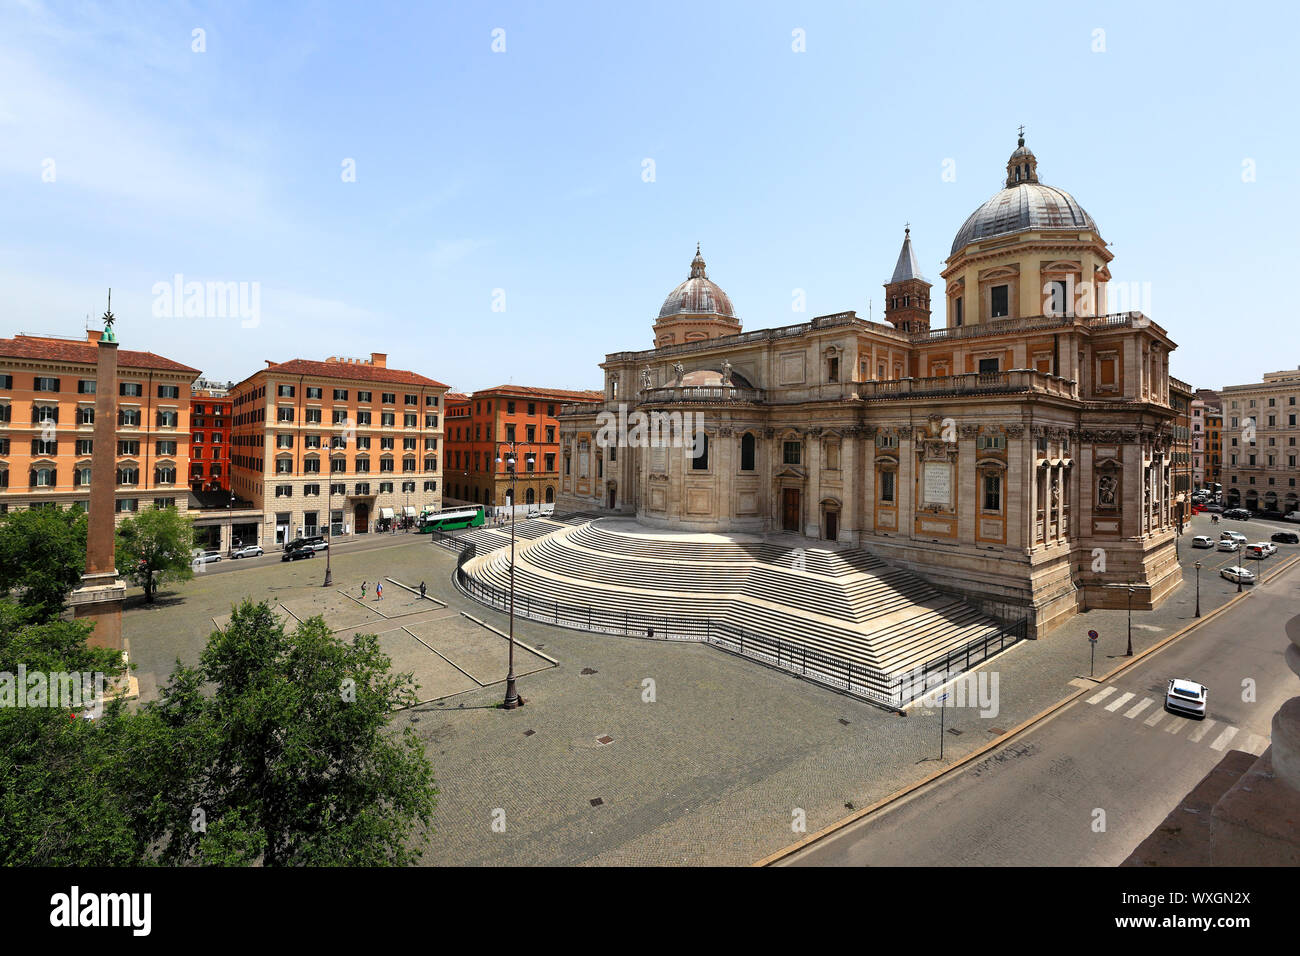 Die Basilika Santa Maria Maggiore und der Piazza dell'Esquilino in Rom, Italien Stockfoto